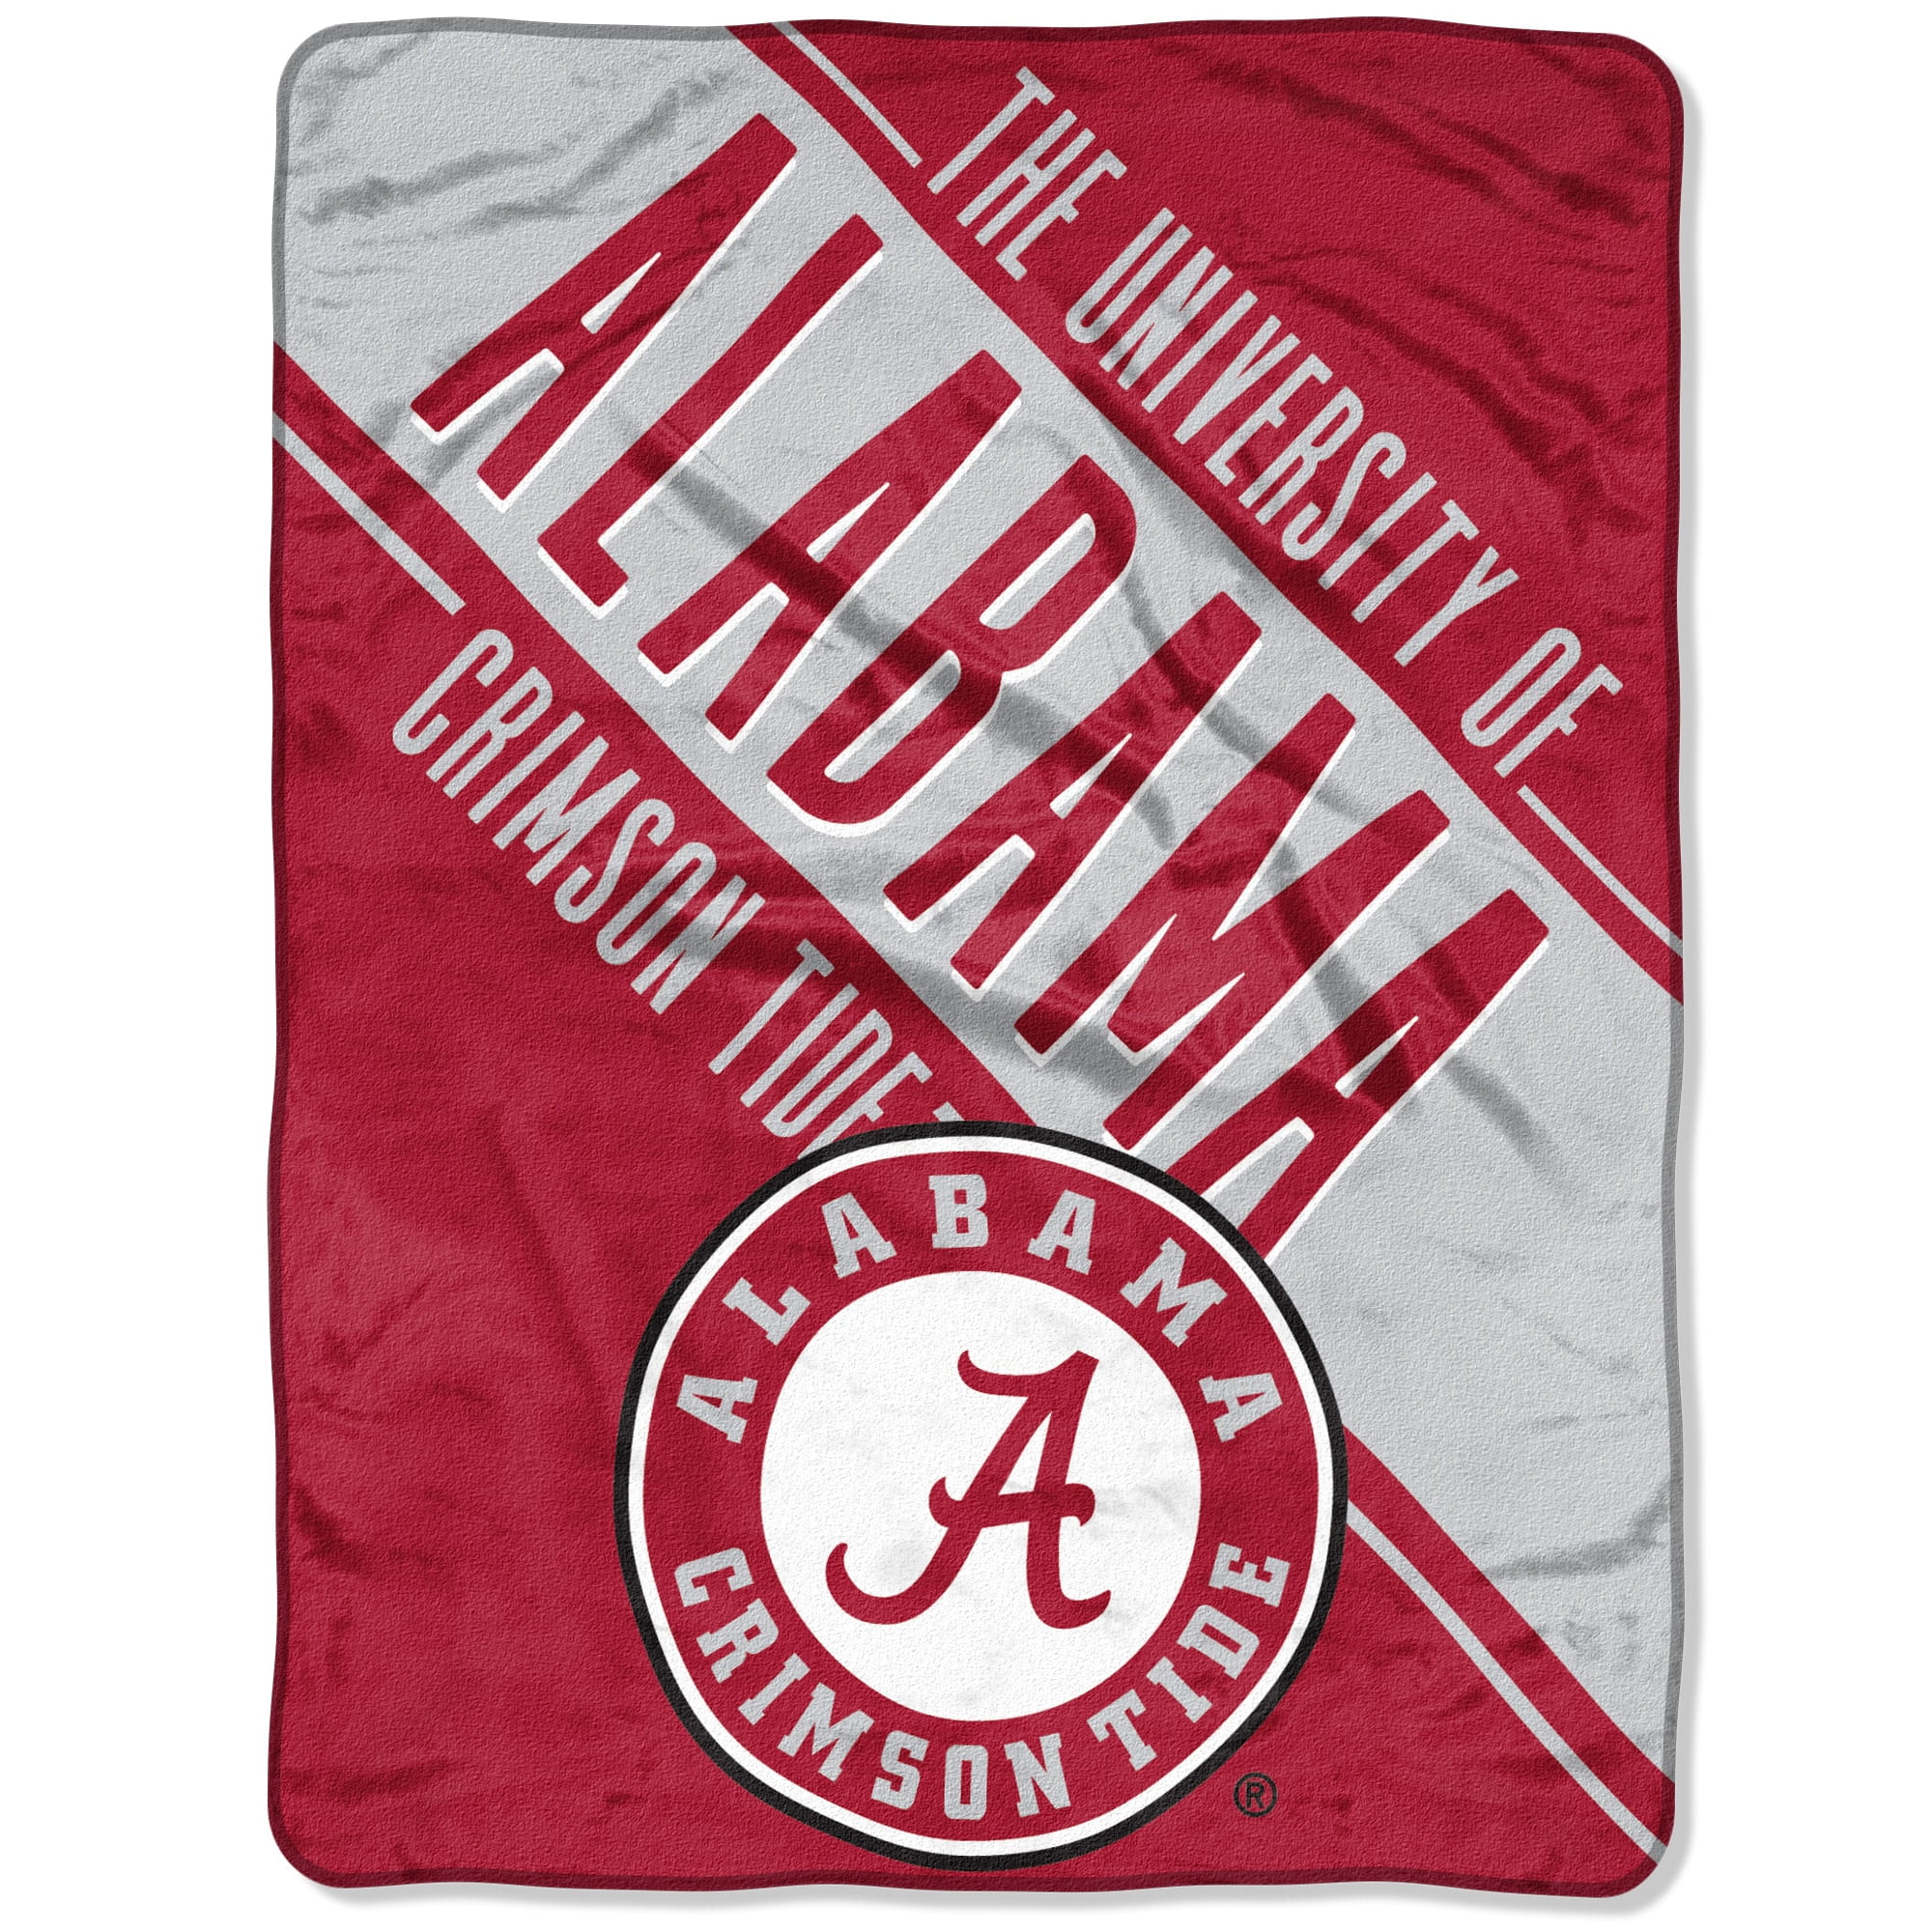 The Northwest Company Officially Licensed NCAA Auburn Tigers Halftone Micro Raschel Throw Blanket 46 x 60 